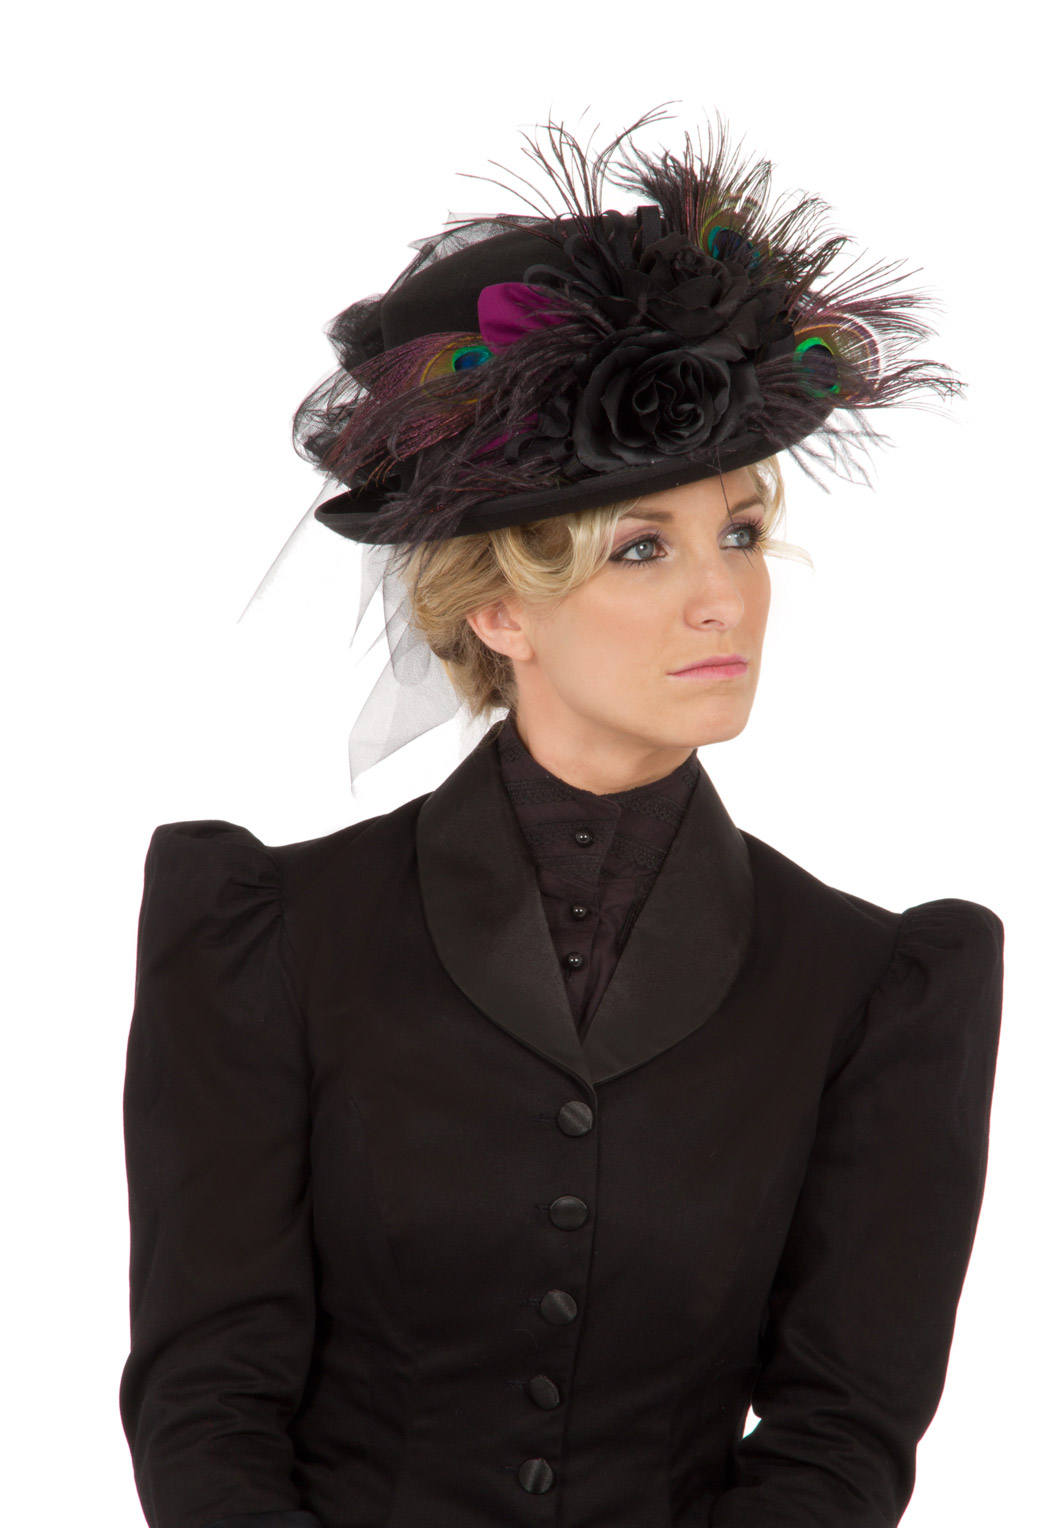 Edwardian Hat Black and Brown Hat Church Hat Victorian Hat Halloween Tea Party Hat 1800s Style Hat Civil War Hat Downton Abbey Hat